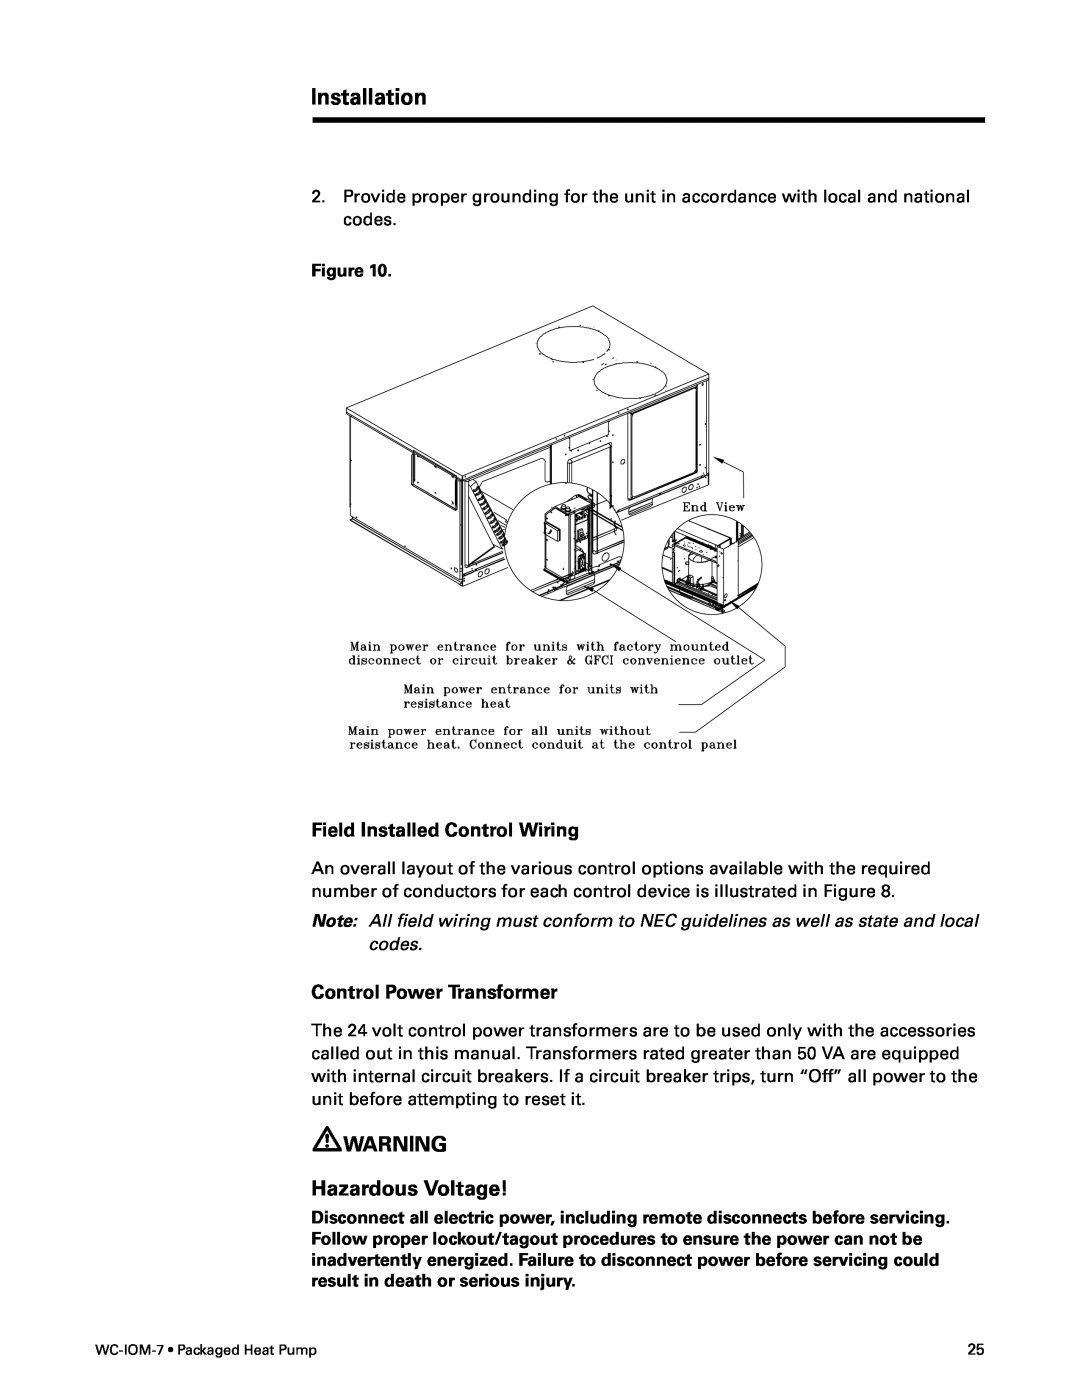 Trane WC-IOM-7 manual Hazardous Voltage, Field Installed Control Wiring, Control Power Transformer, Installation 